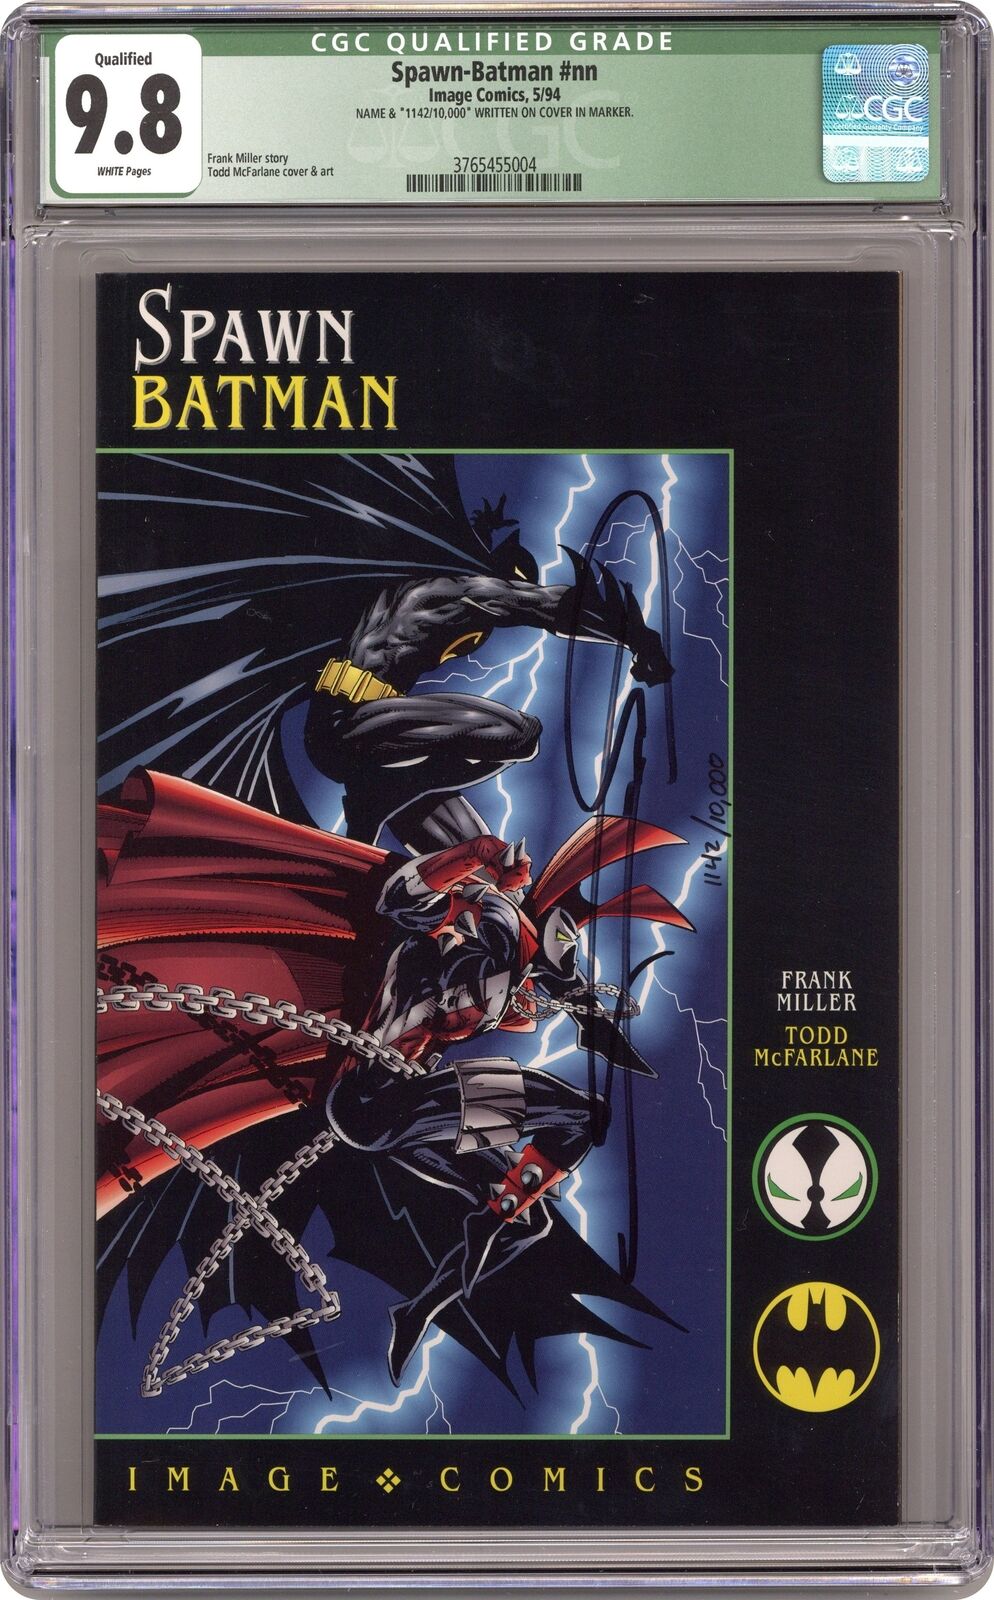 Spawn Batman #1 DF Signed Variant CGC 9.8 QUALIFIED 1994 3765455004